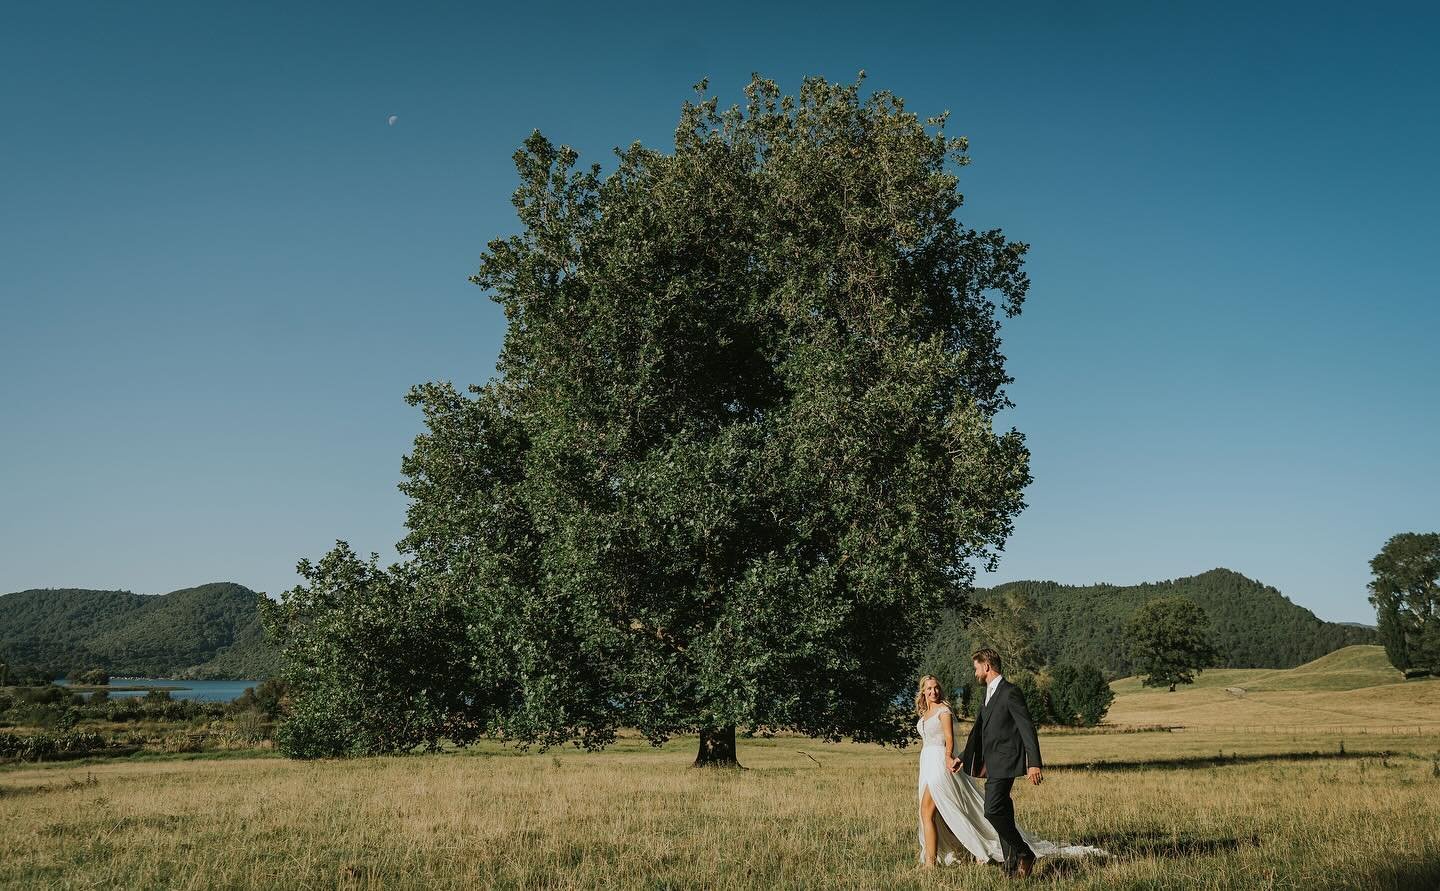 Endless blue skies for Machaela + Pete's 'something blue' on their wedding day 🩵

@intheframe_weddings